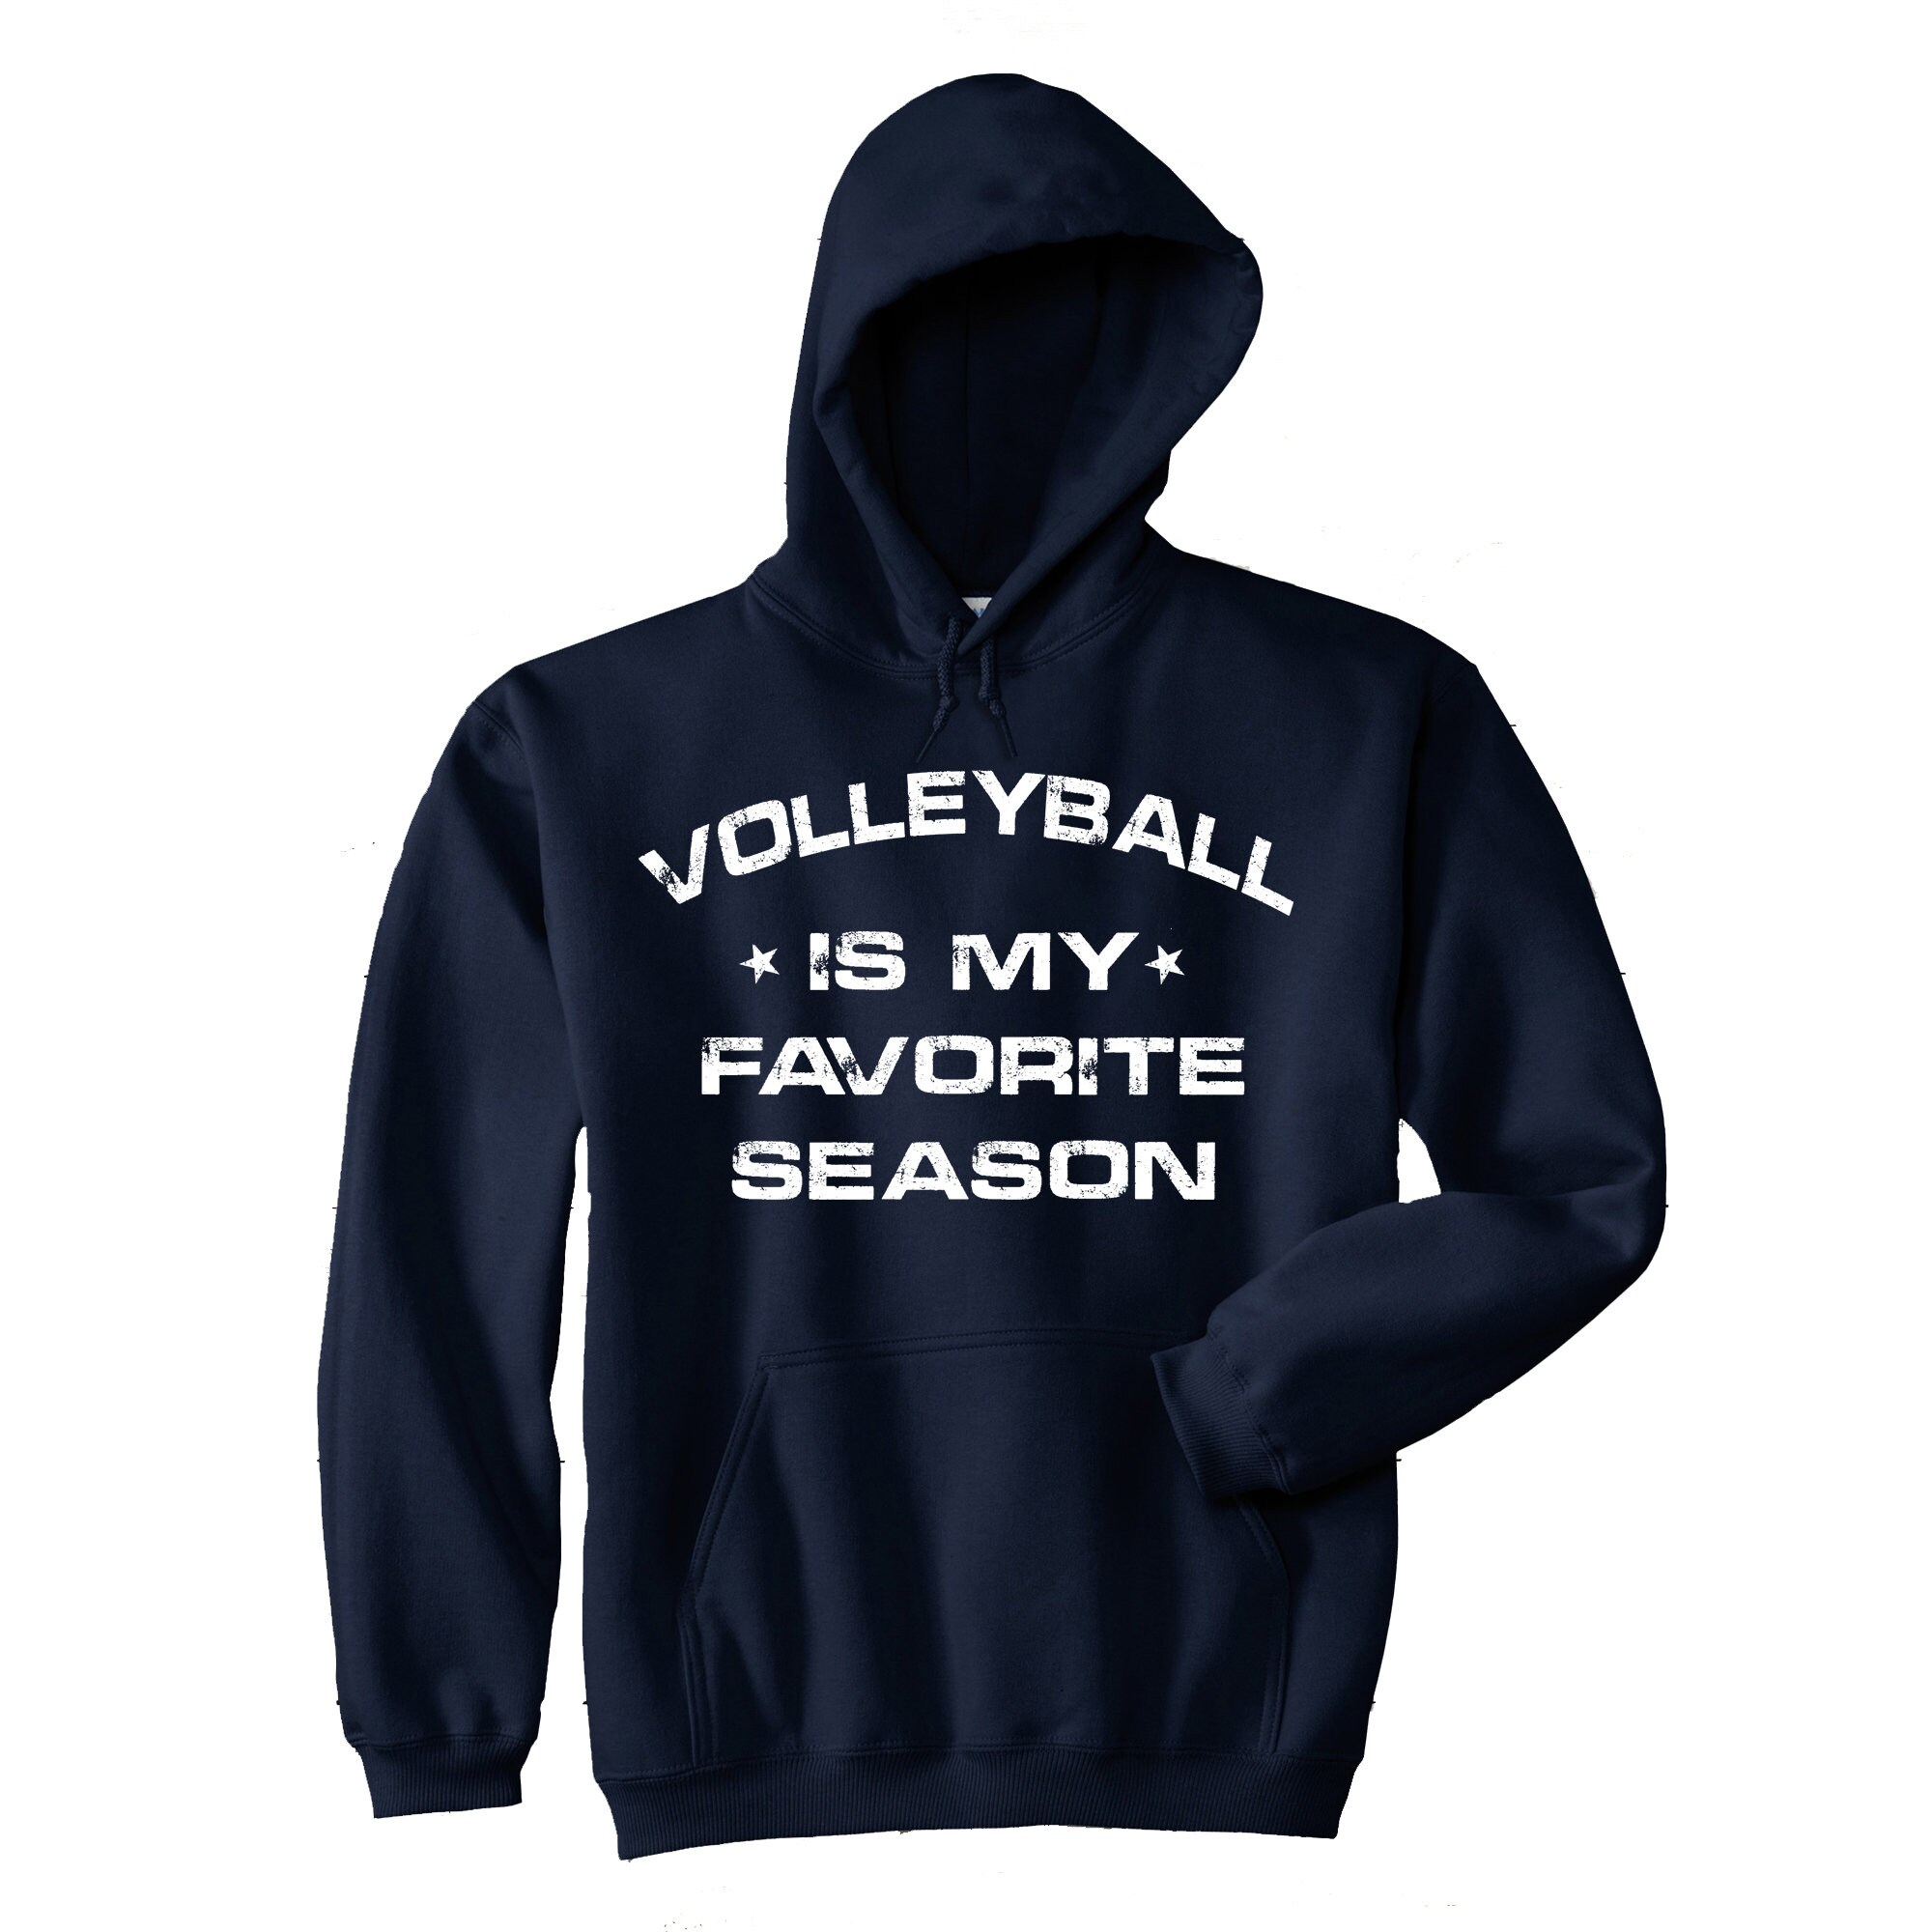 Volleyball is my favorite season hoodie volleyball hoodie | Etsy